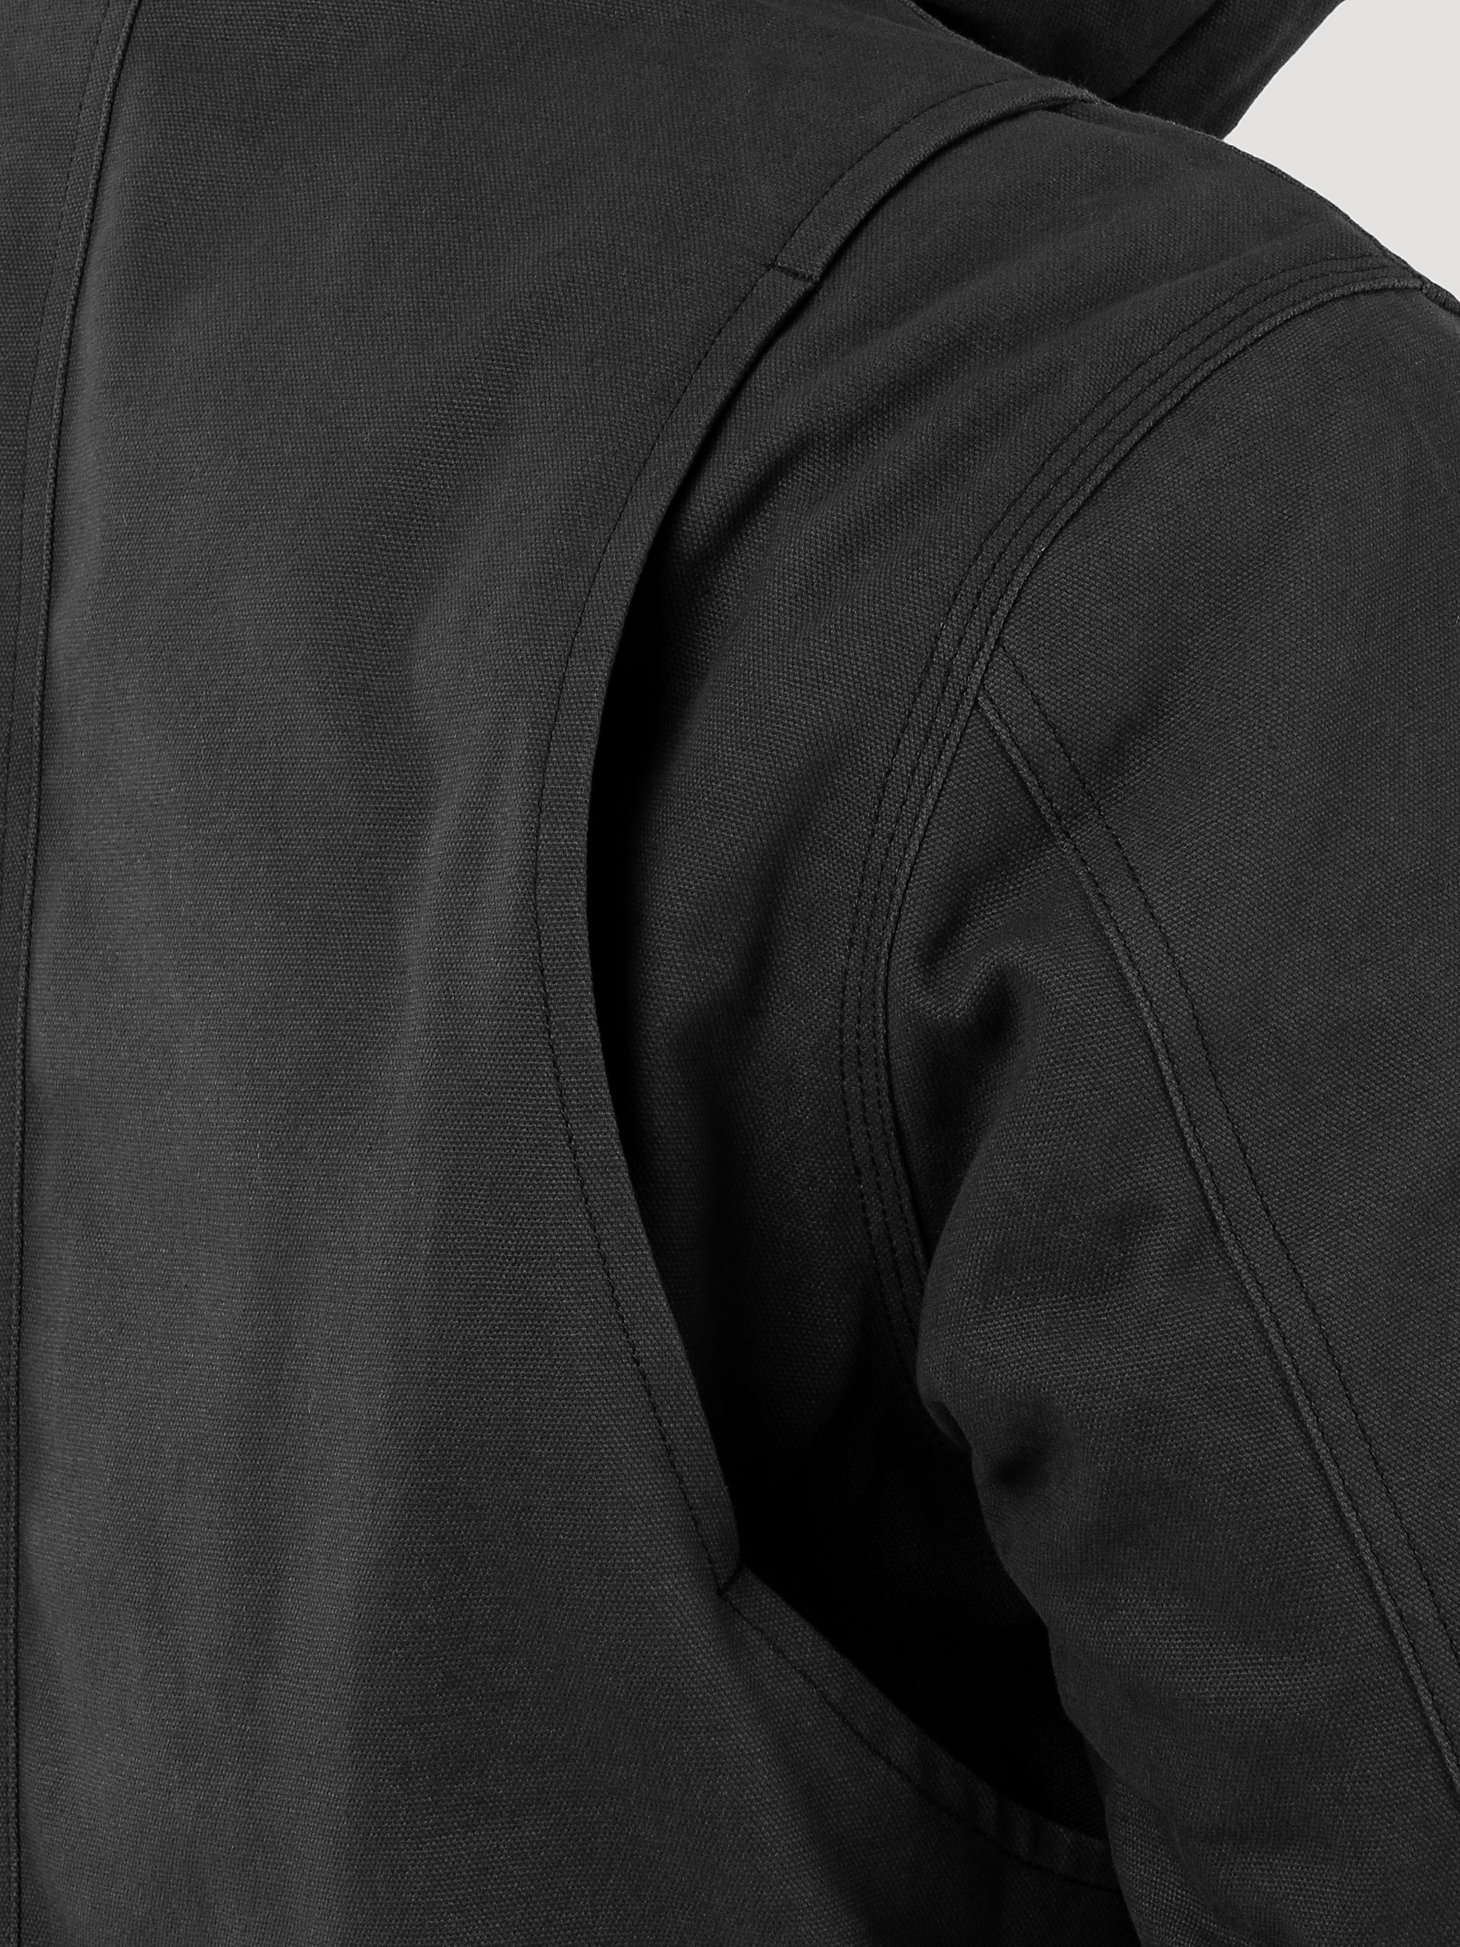 Wrangler® Workwear Sherpa Lined Shirt Jacket in Black alternative view 5